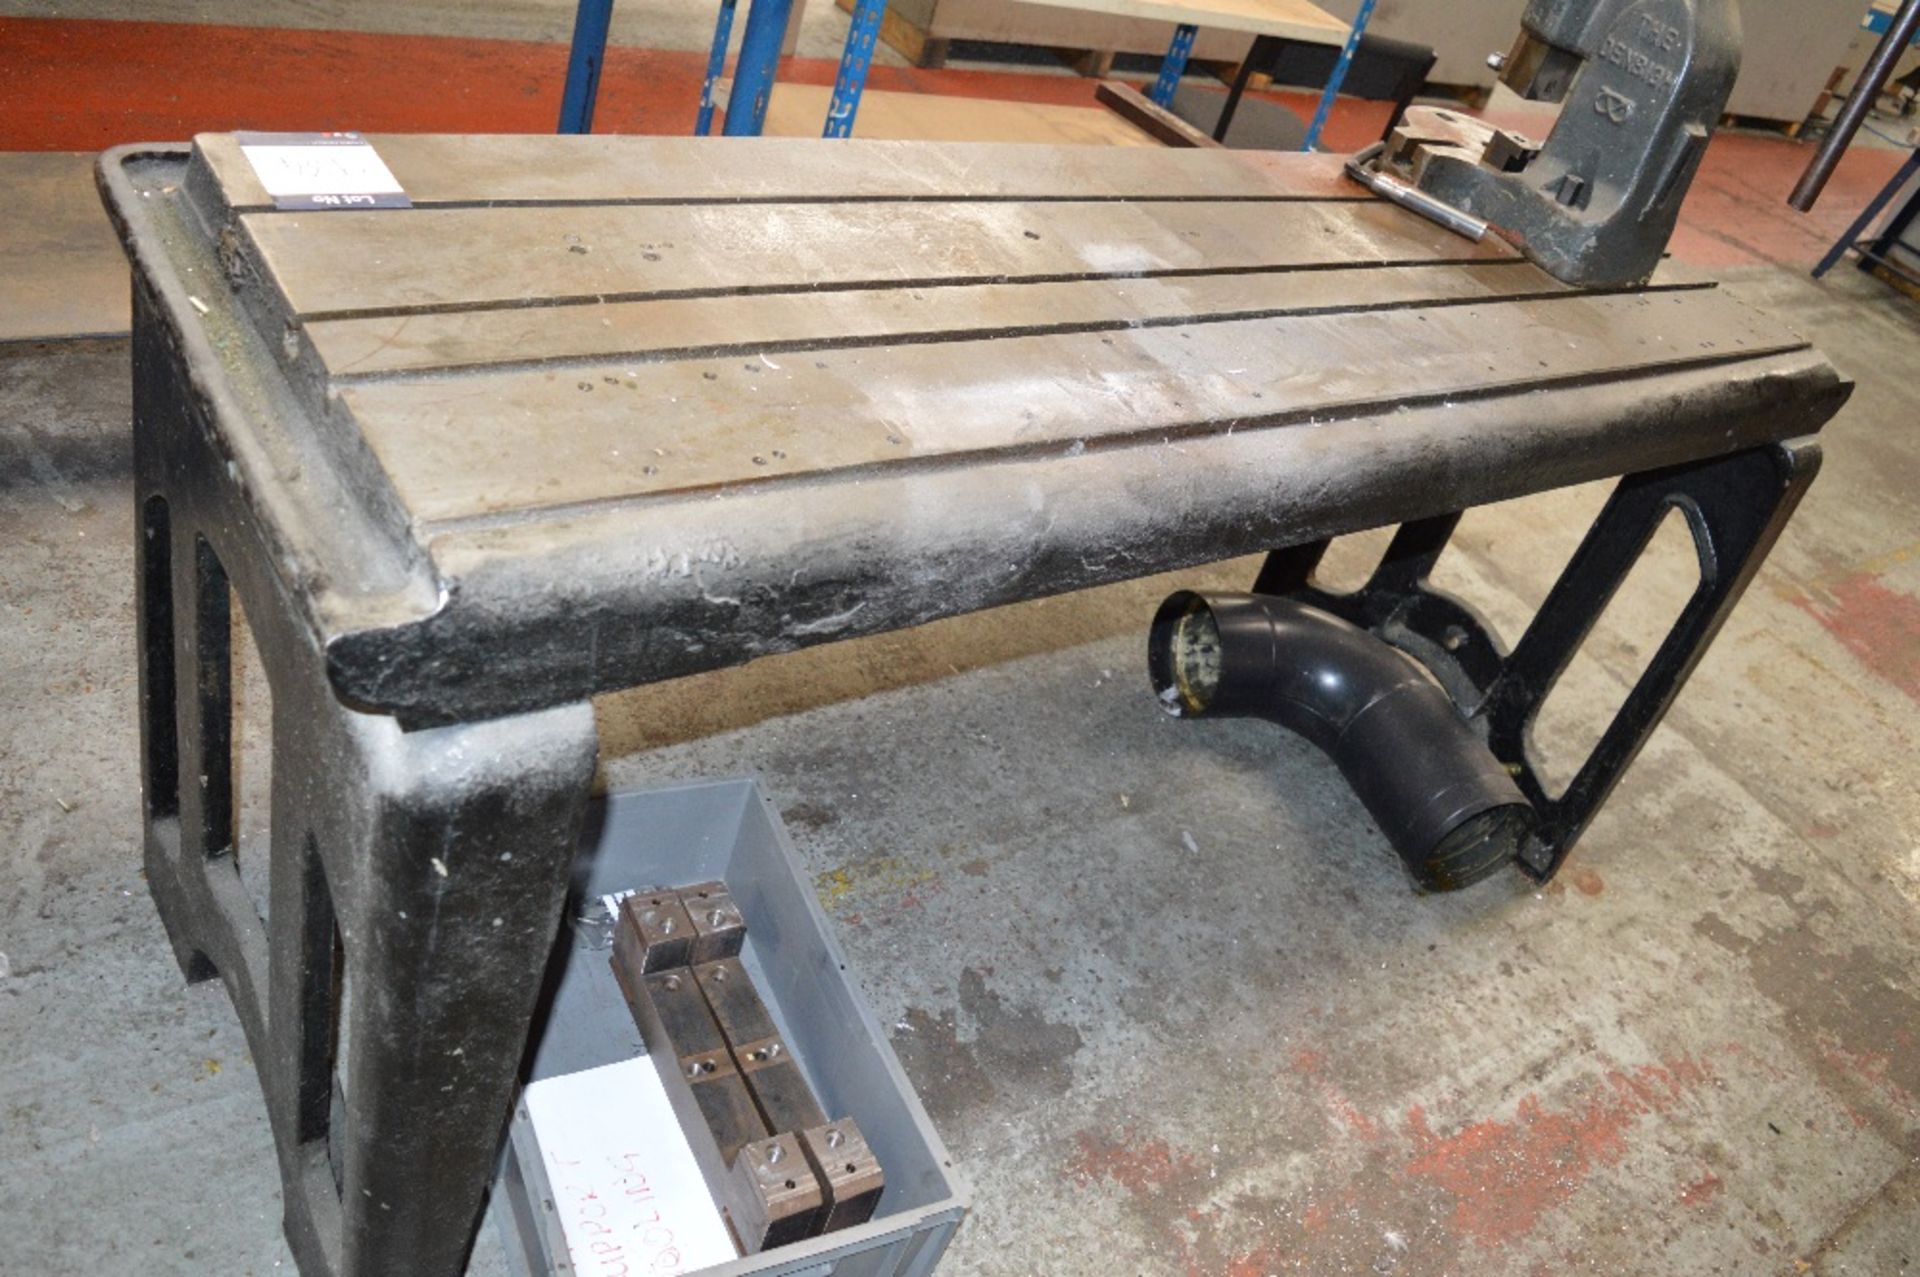 Steel Welding Bench
1.95m (w) x 0.63m (d) x 0.93m (h)